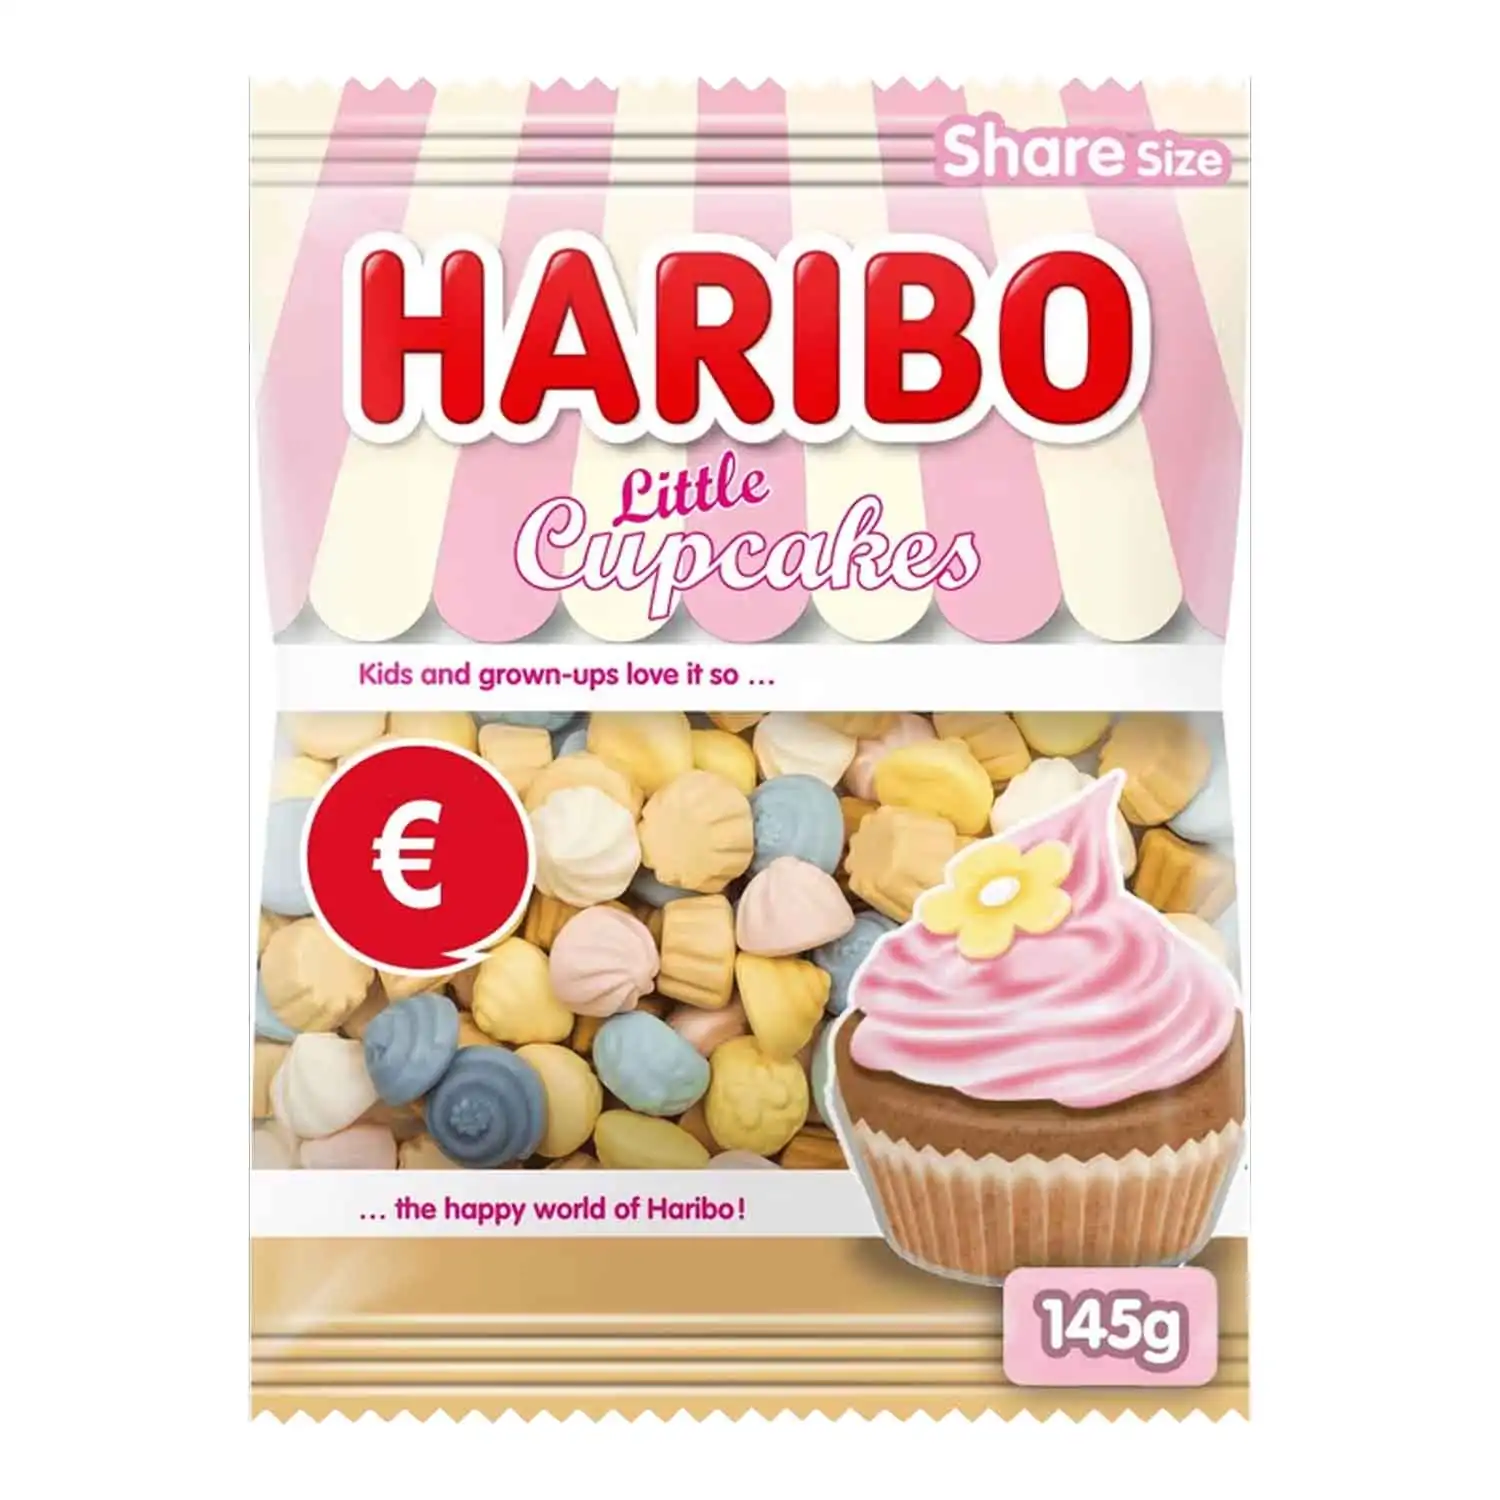 Haribo little cupcakes 145g